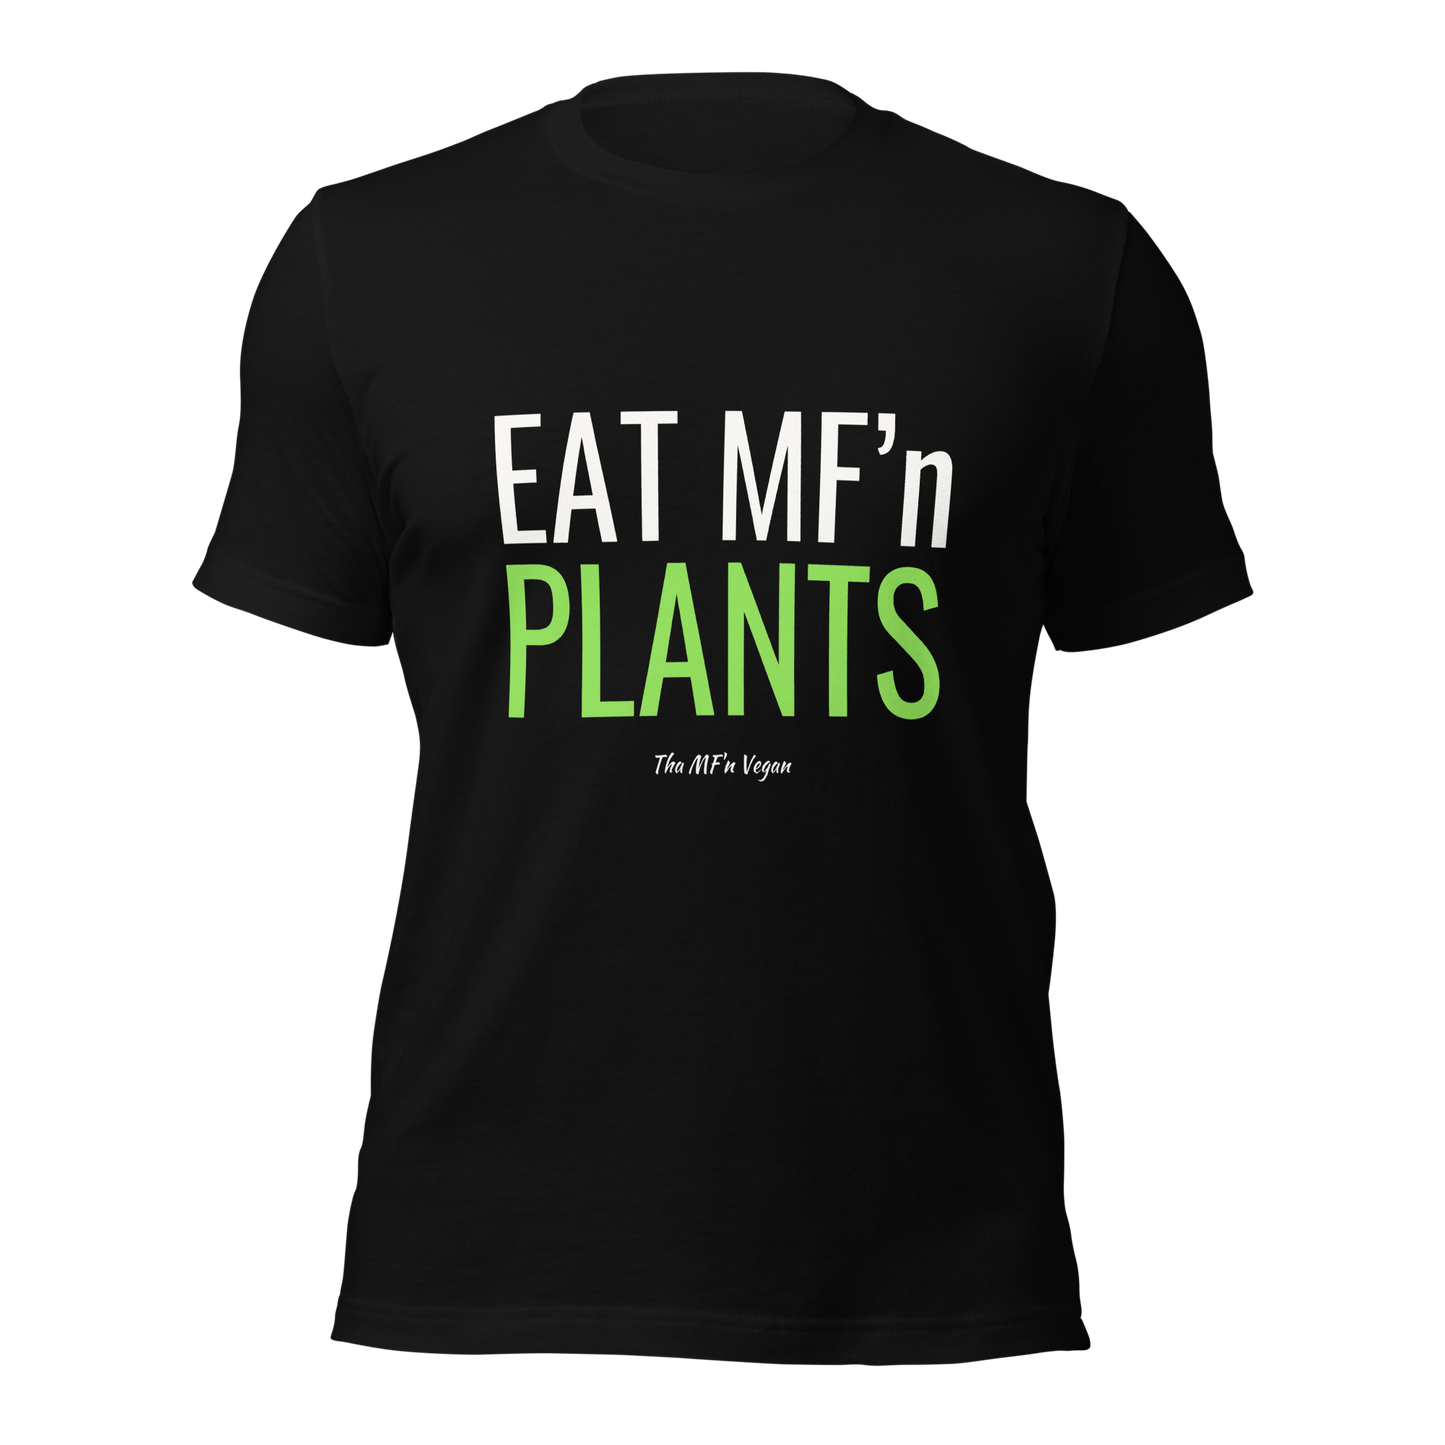 Eat MF'n Plants